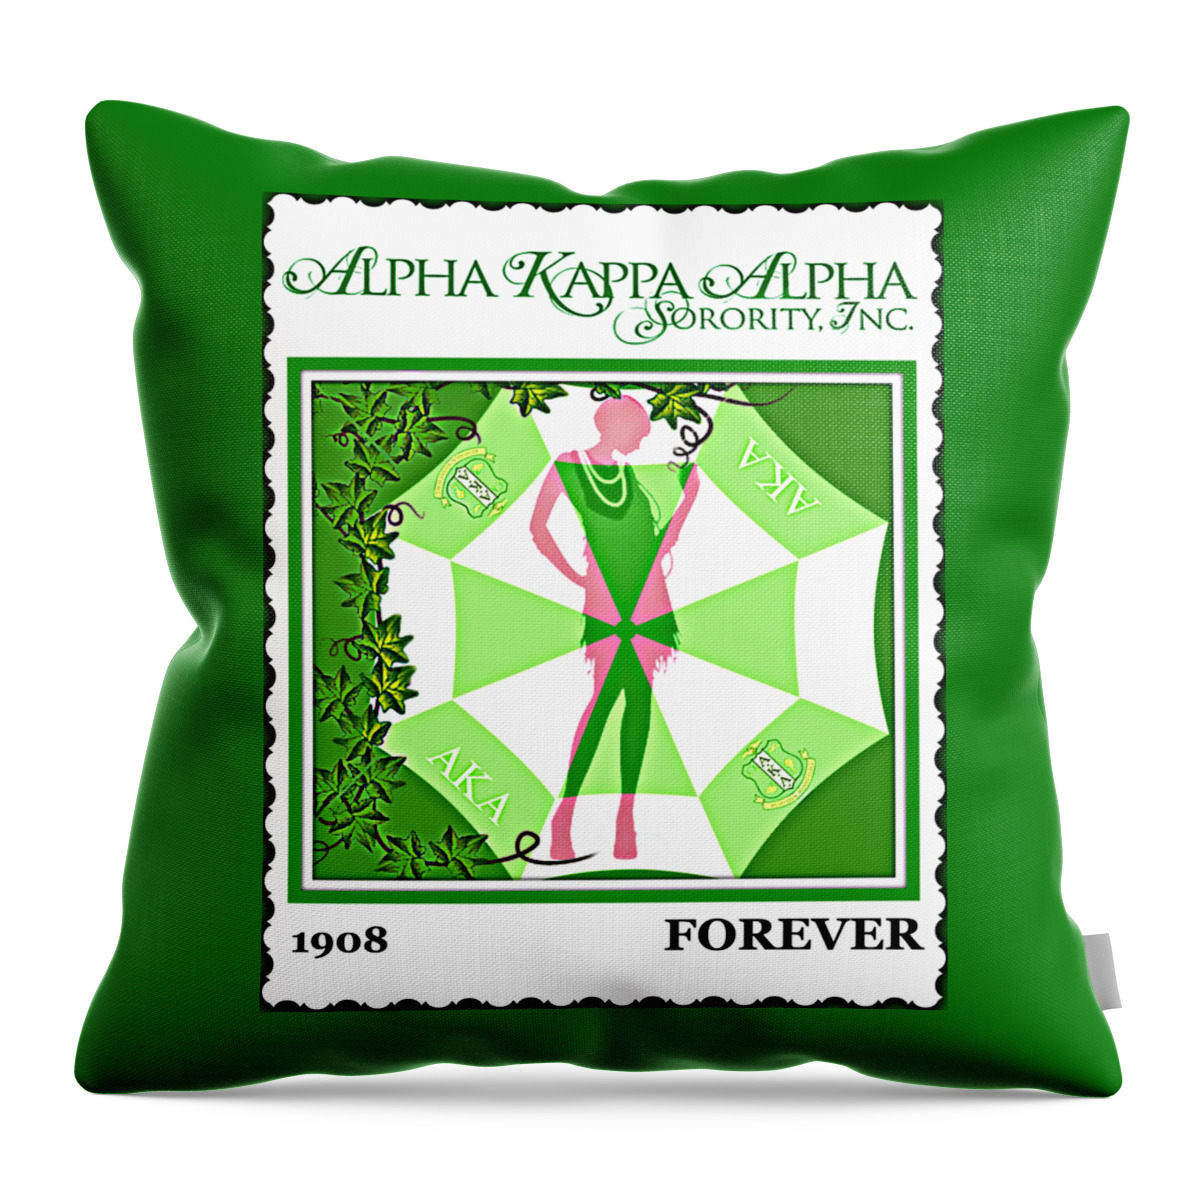 A K A Throw Pillow featuring the digital art Alpha Kappa Alpha by Lynda Payton